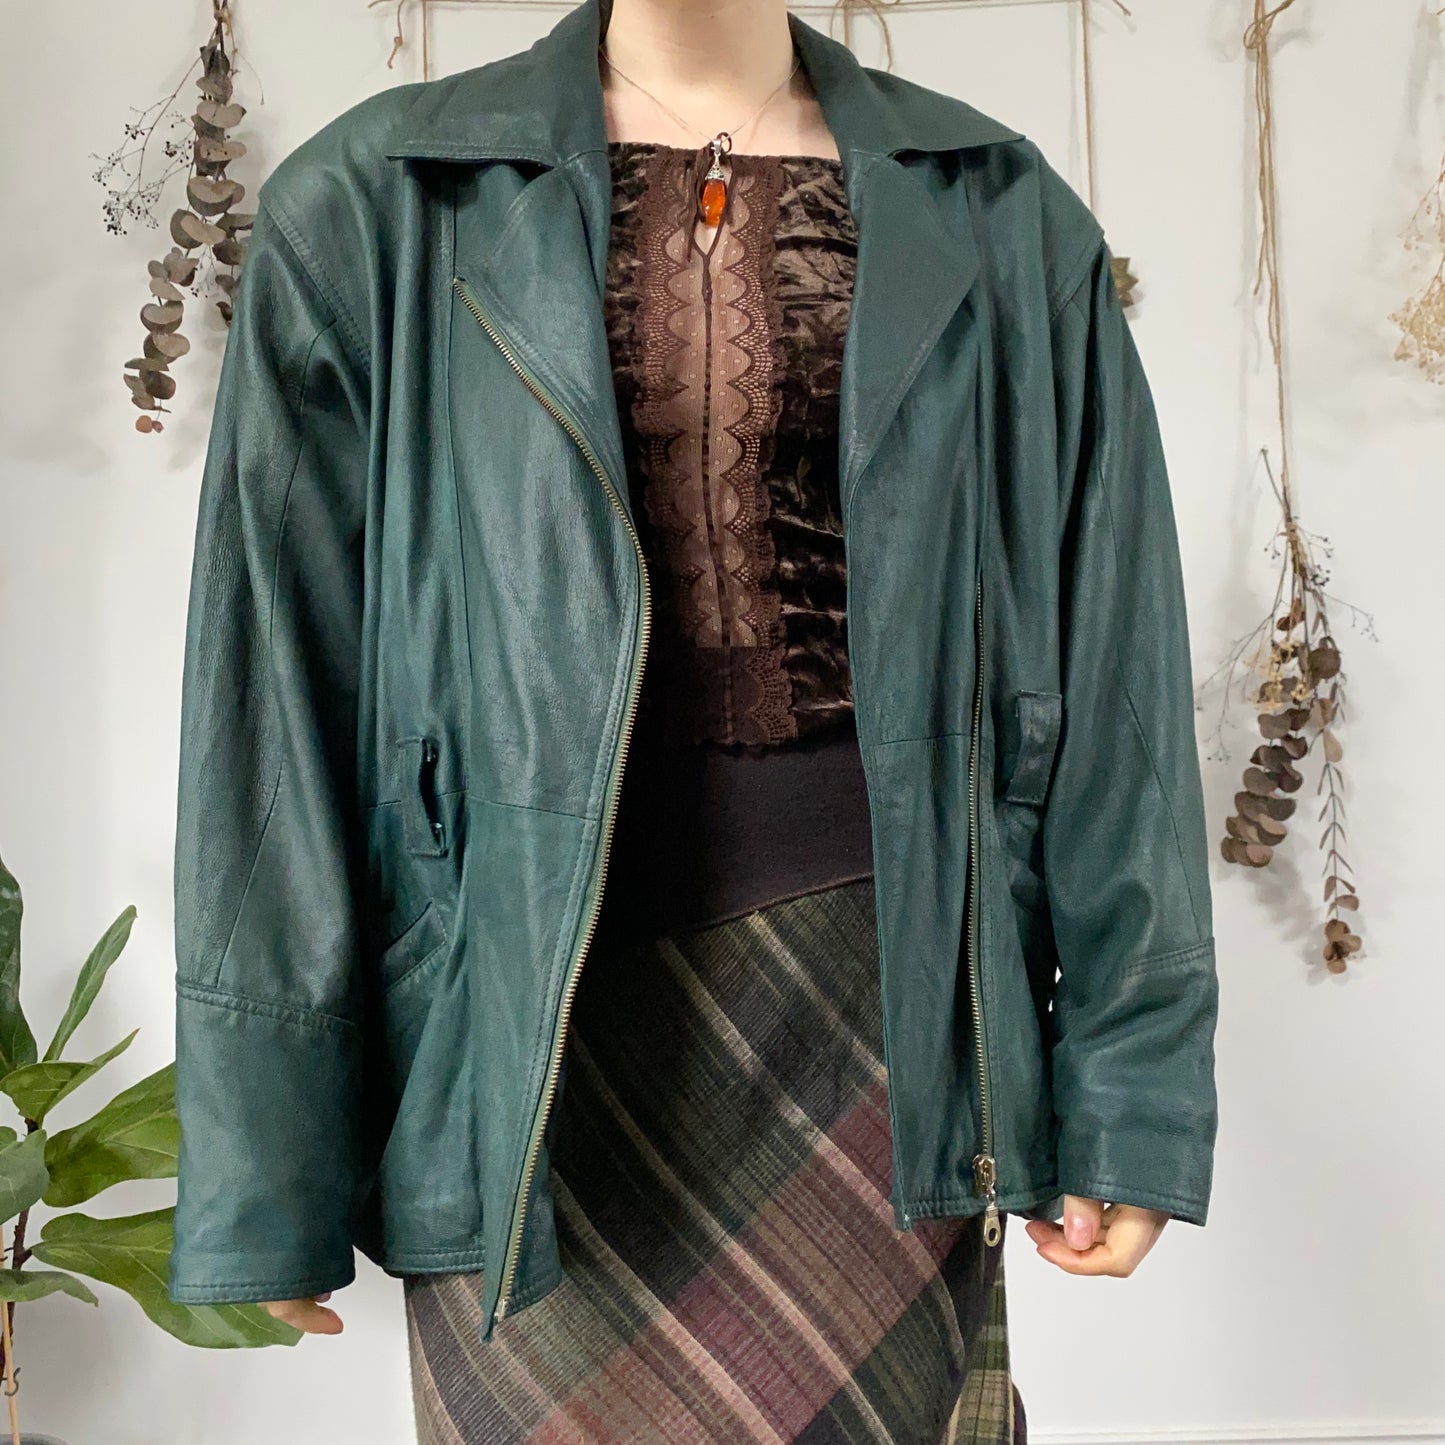 Green leather jacket - size L/XL